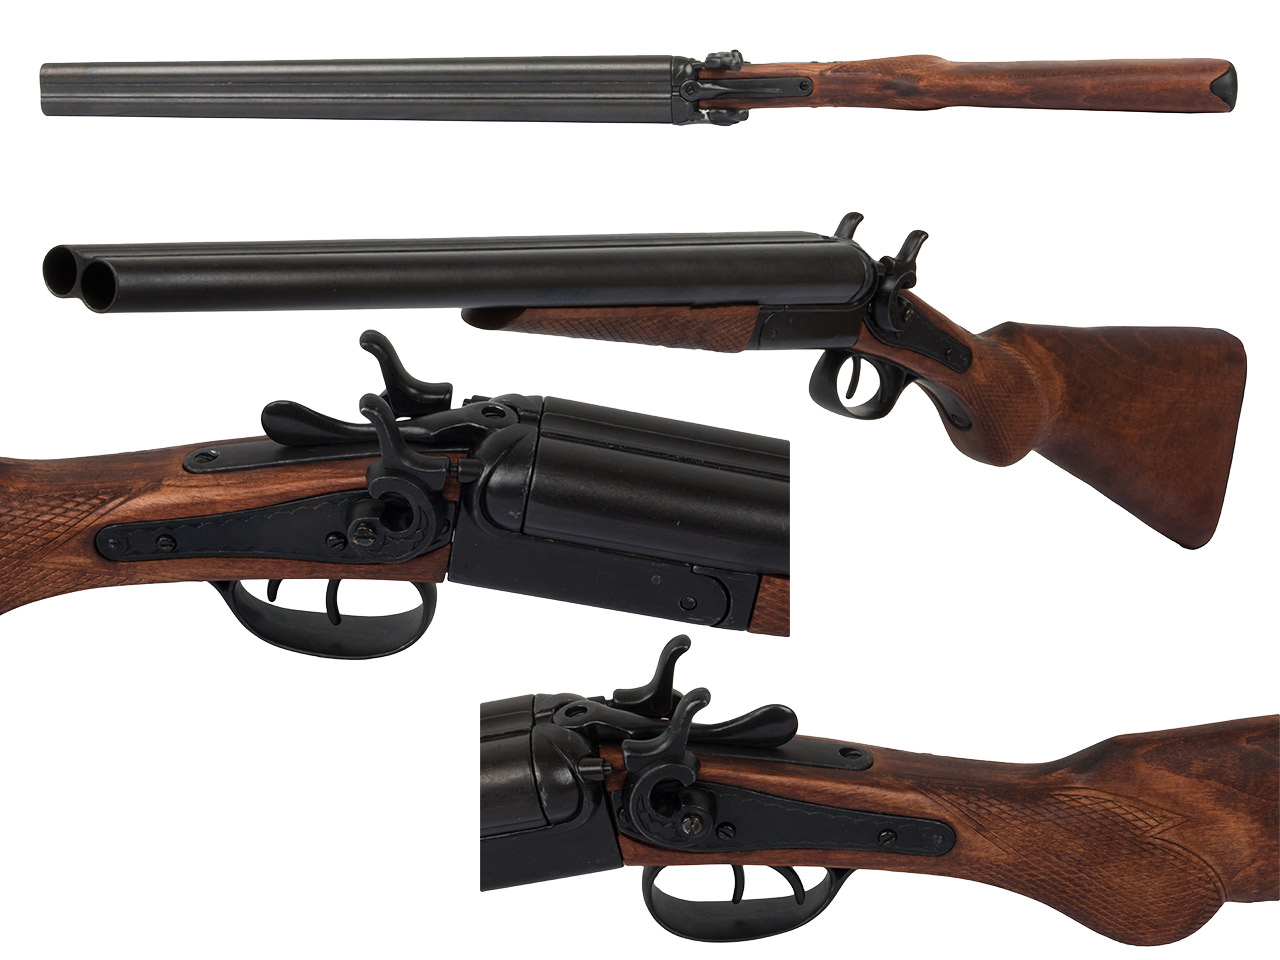 B-Ware Deko Doppelhahn Schrotflinte Wyatt Earp Double Barrel Shotgun USA 1868 voll beweglich Länge 89 cm schwarz